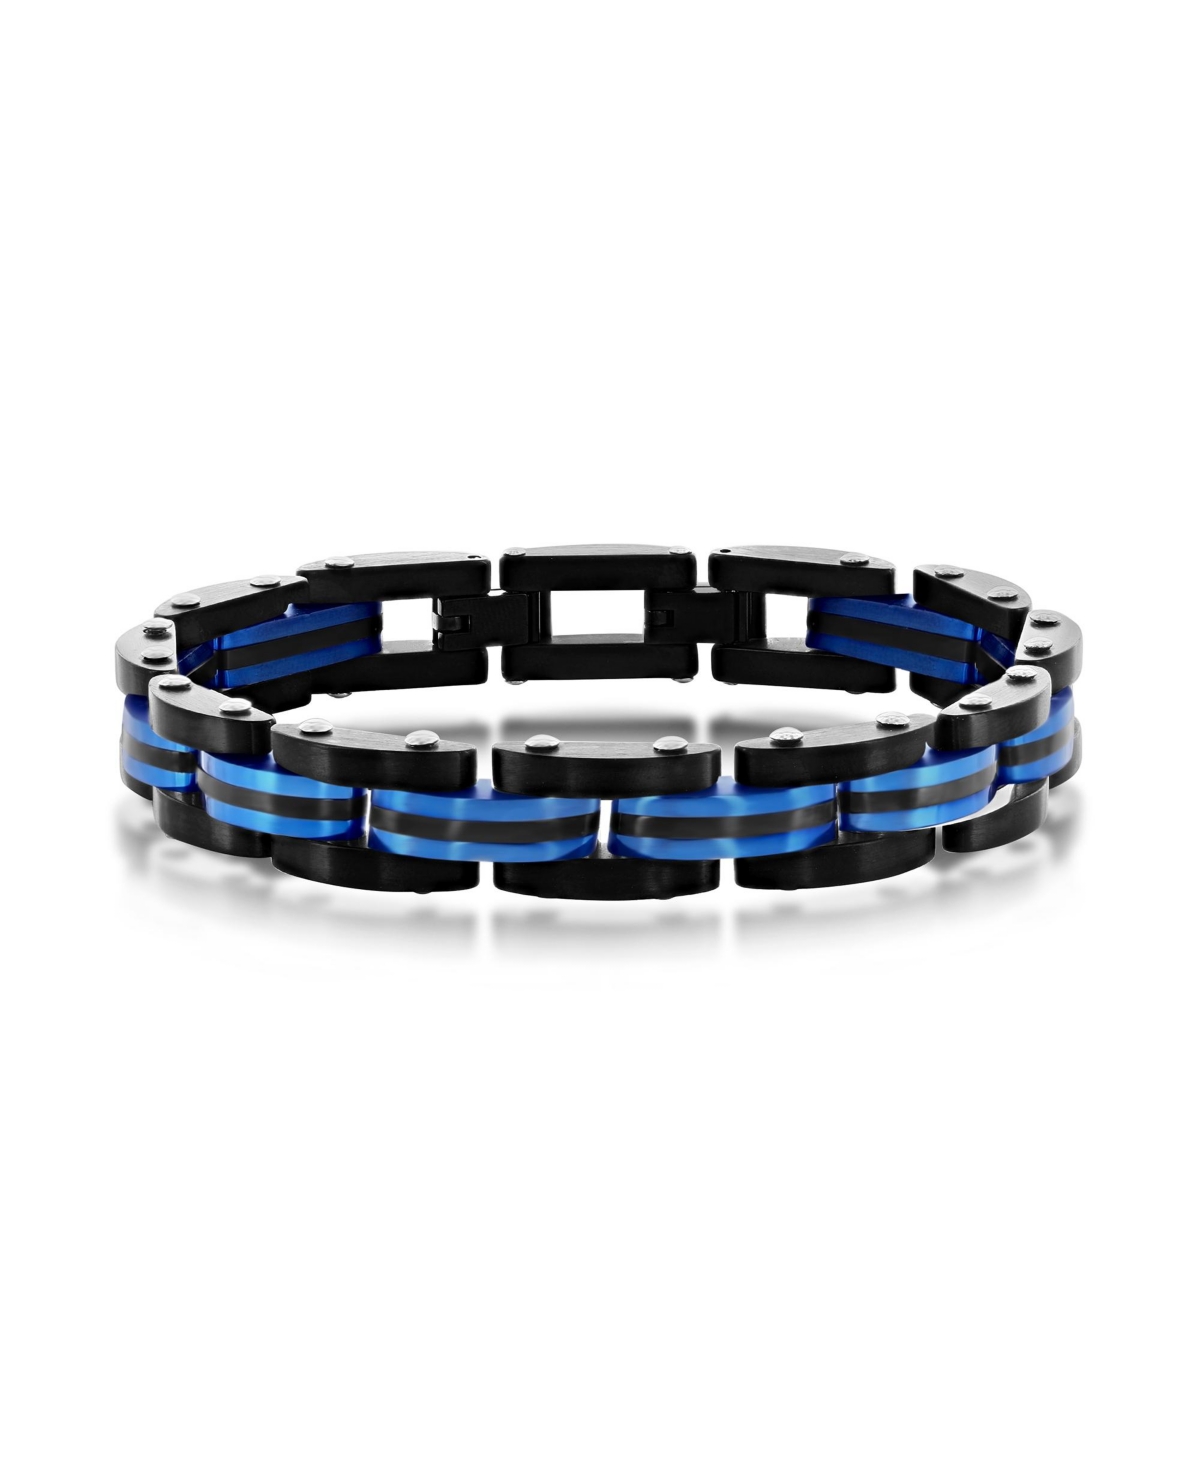 Stainless Steel Two-Toned Striped Link Bracelet - Black  blue